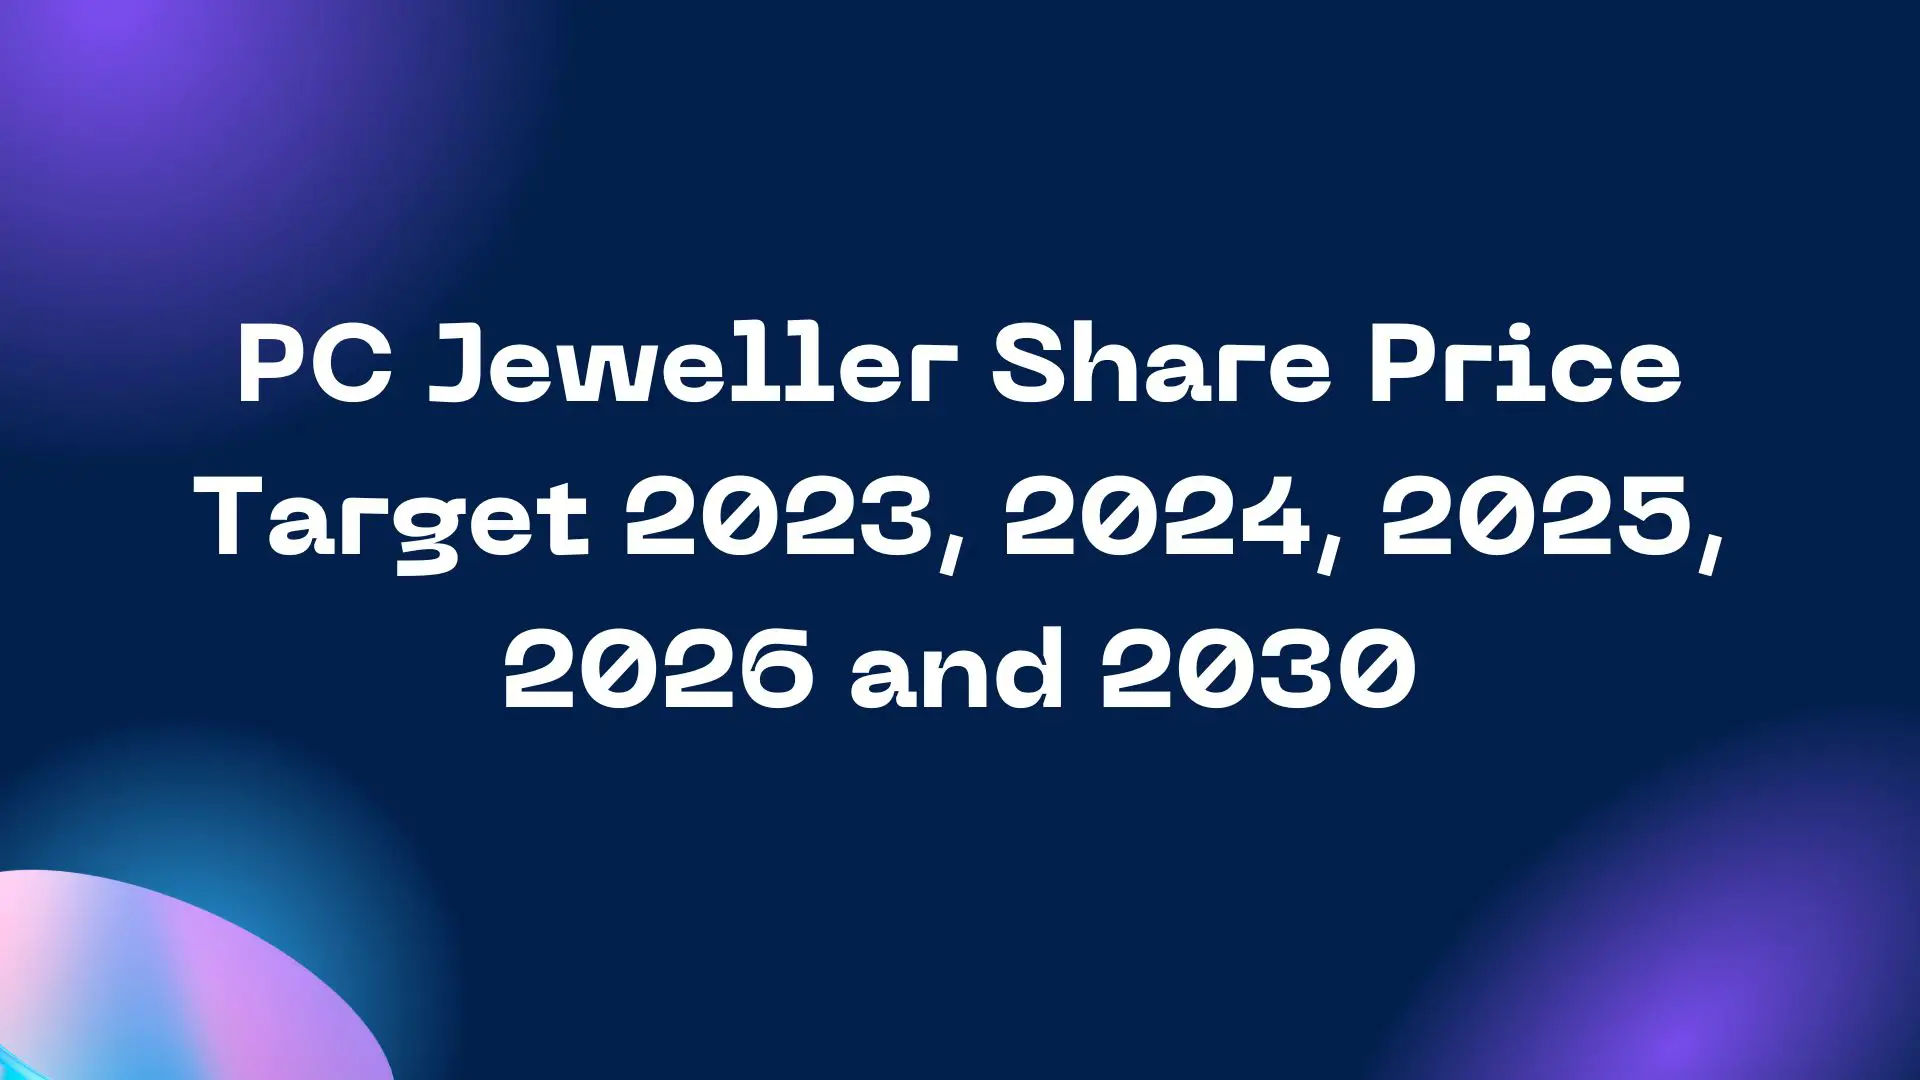 Airan Share Price Target 2023, 2024, 2025, 2026, 2030